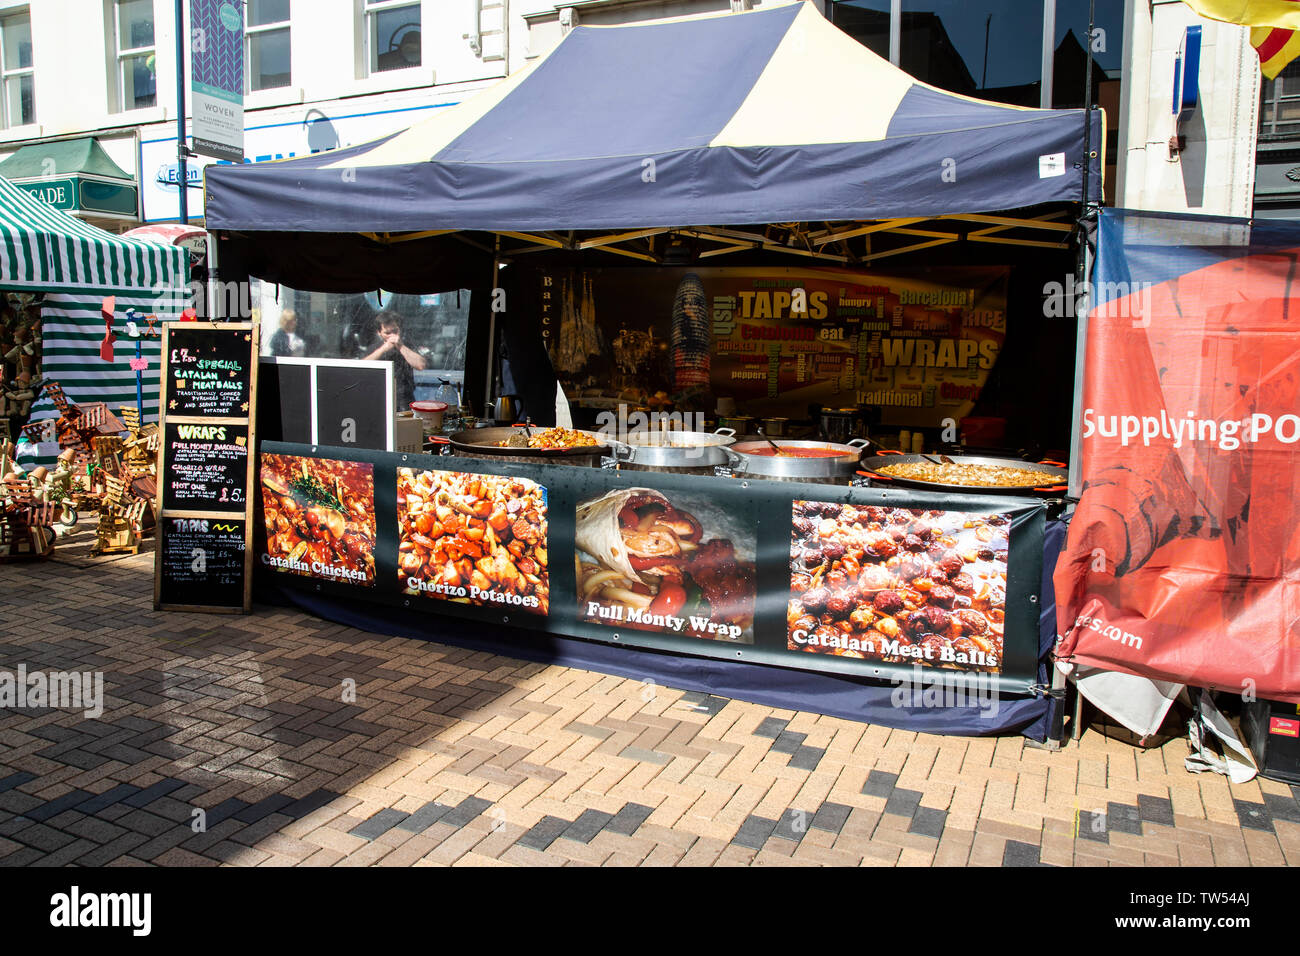 Spanish food market stall at an International street fair. Stock Photo